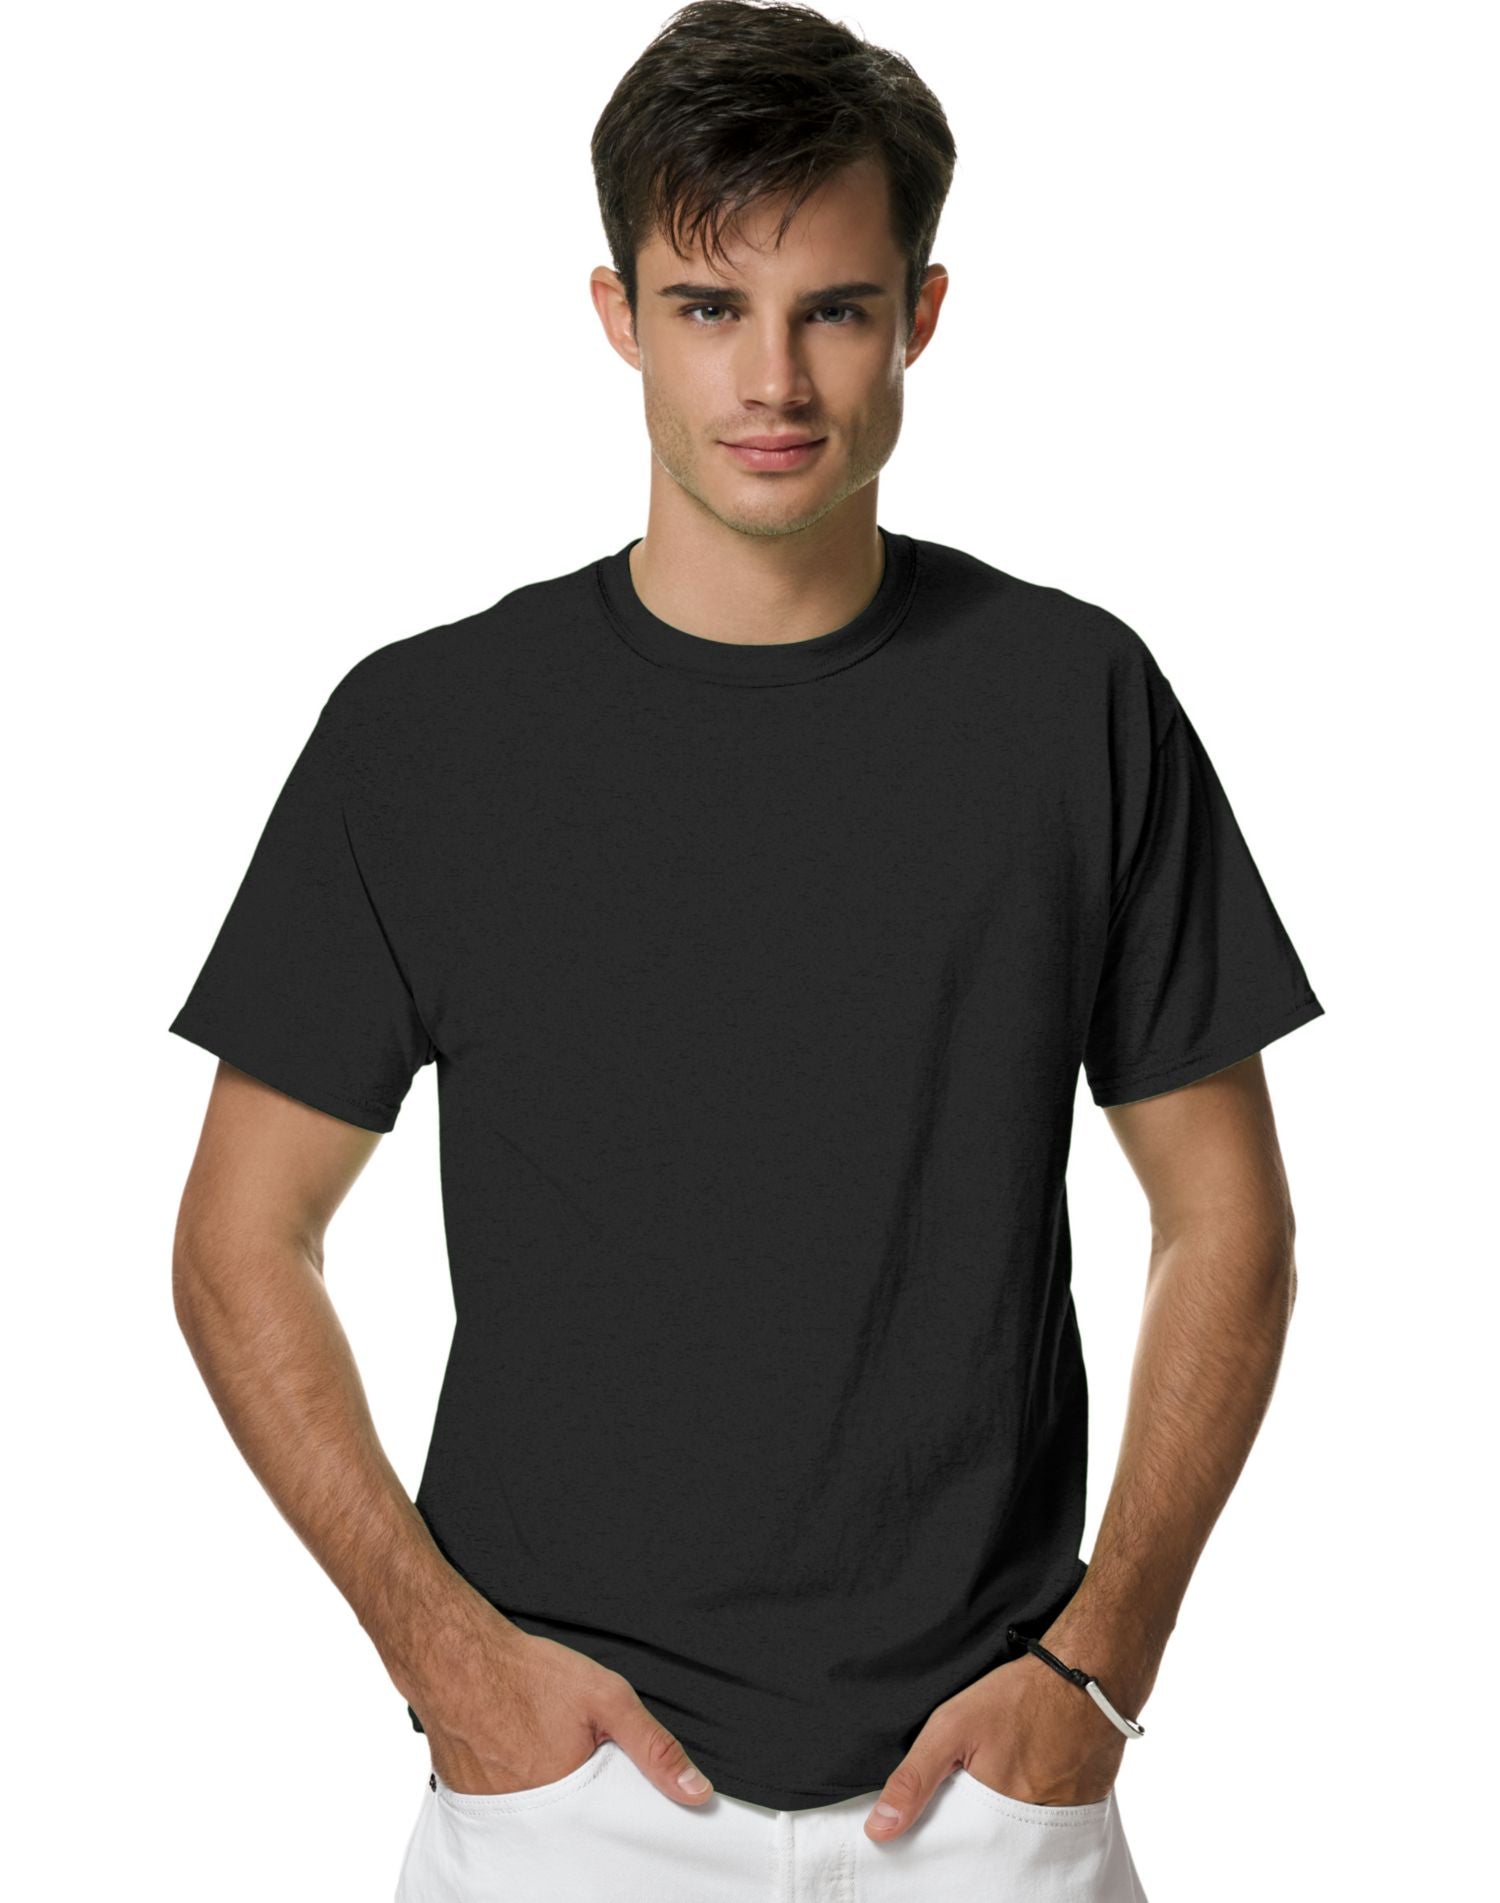 4200 - Hanes Unisex Adult X-Temp Performance T-Shirt